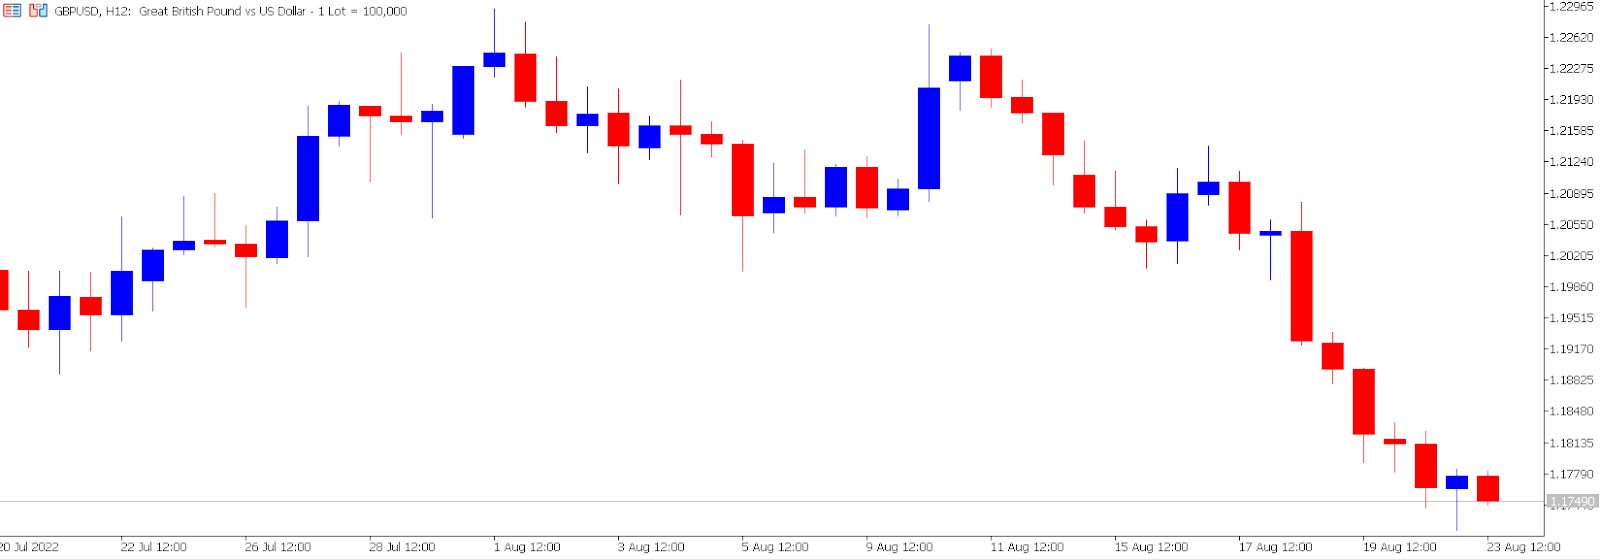 GBP/USD 12-hour price chart.